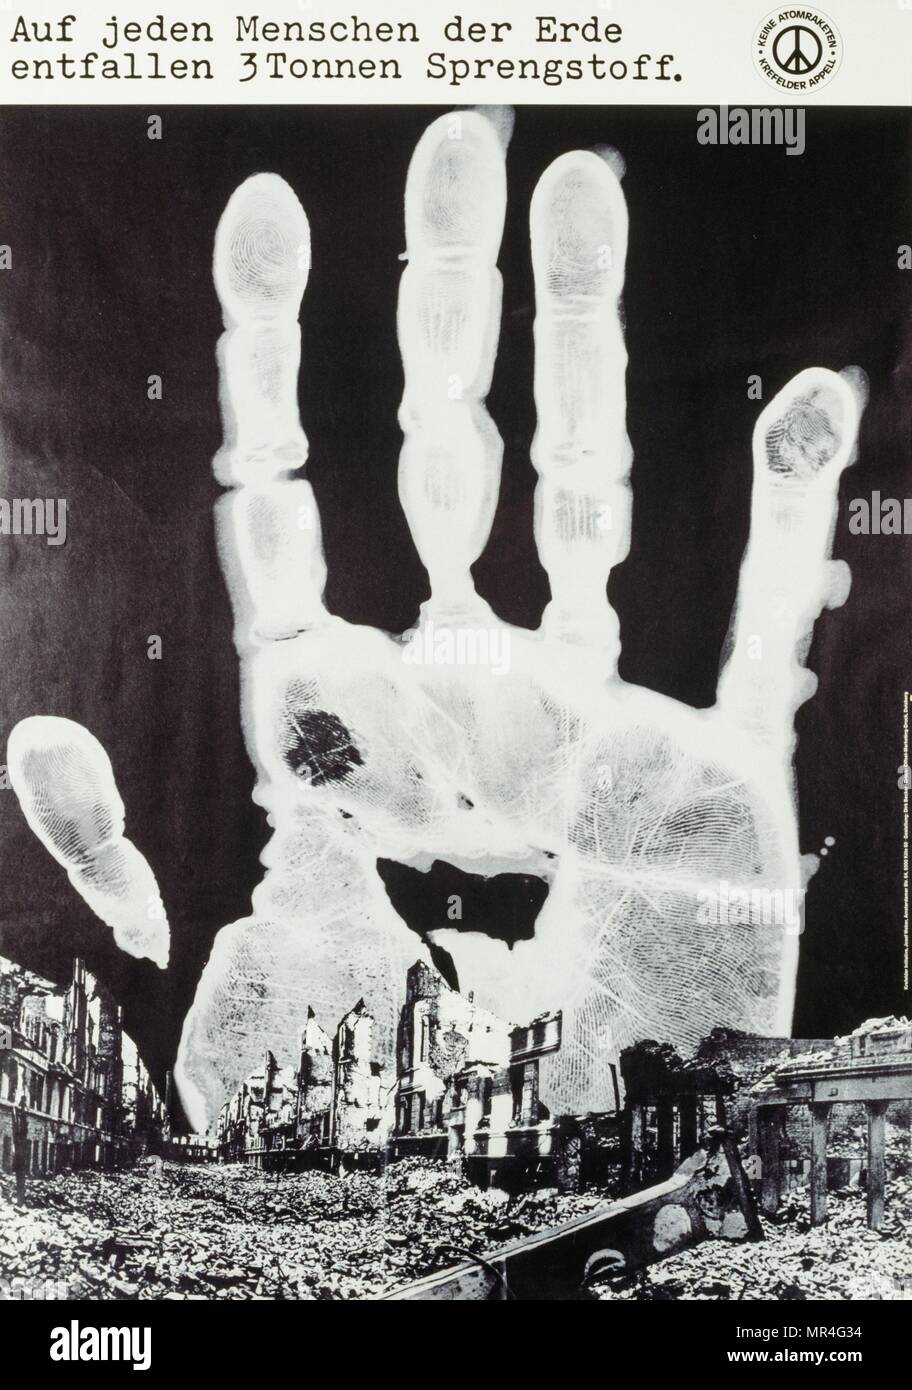 Auf Jeden Menschen der Erde entfallen 3 Tonnen Sprengstoff' (Everyone on the earth is killed by three tons of explosives), German anti-war poster. Cold War Propaganda 1980 Stock Photo